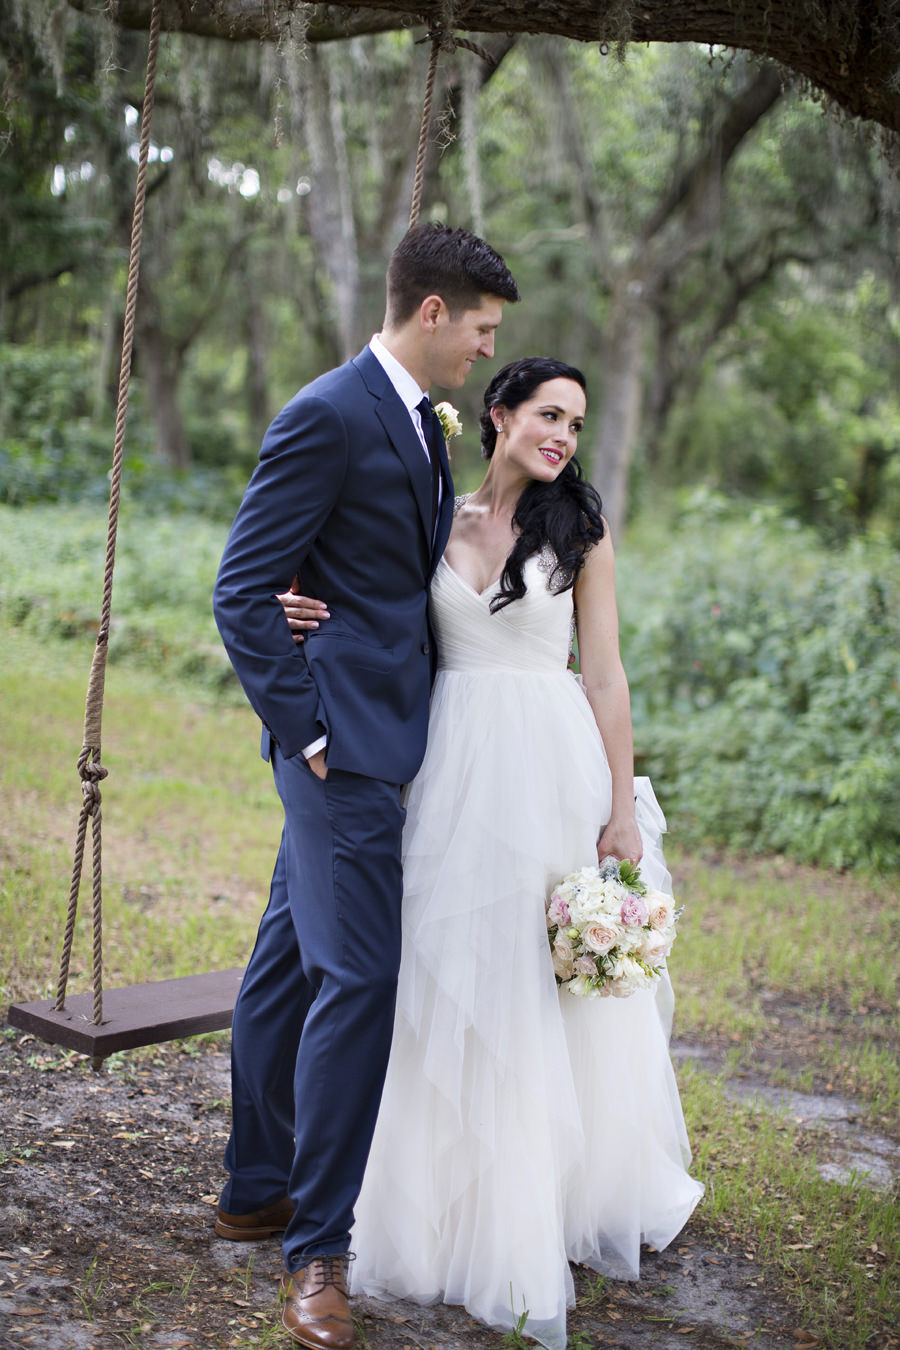 Outdoor Bride and Groom Wedding Portrait with Rustic Tree Swing | Tampa Bay Wedding Venue Cross Creek Ranch | Wedding Photographer Djamel Photography